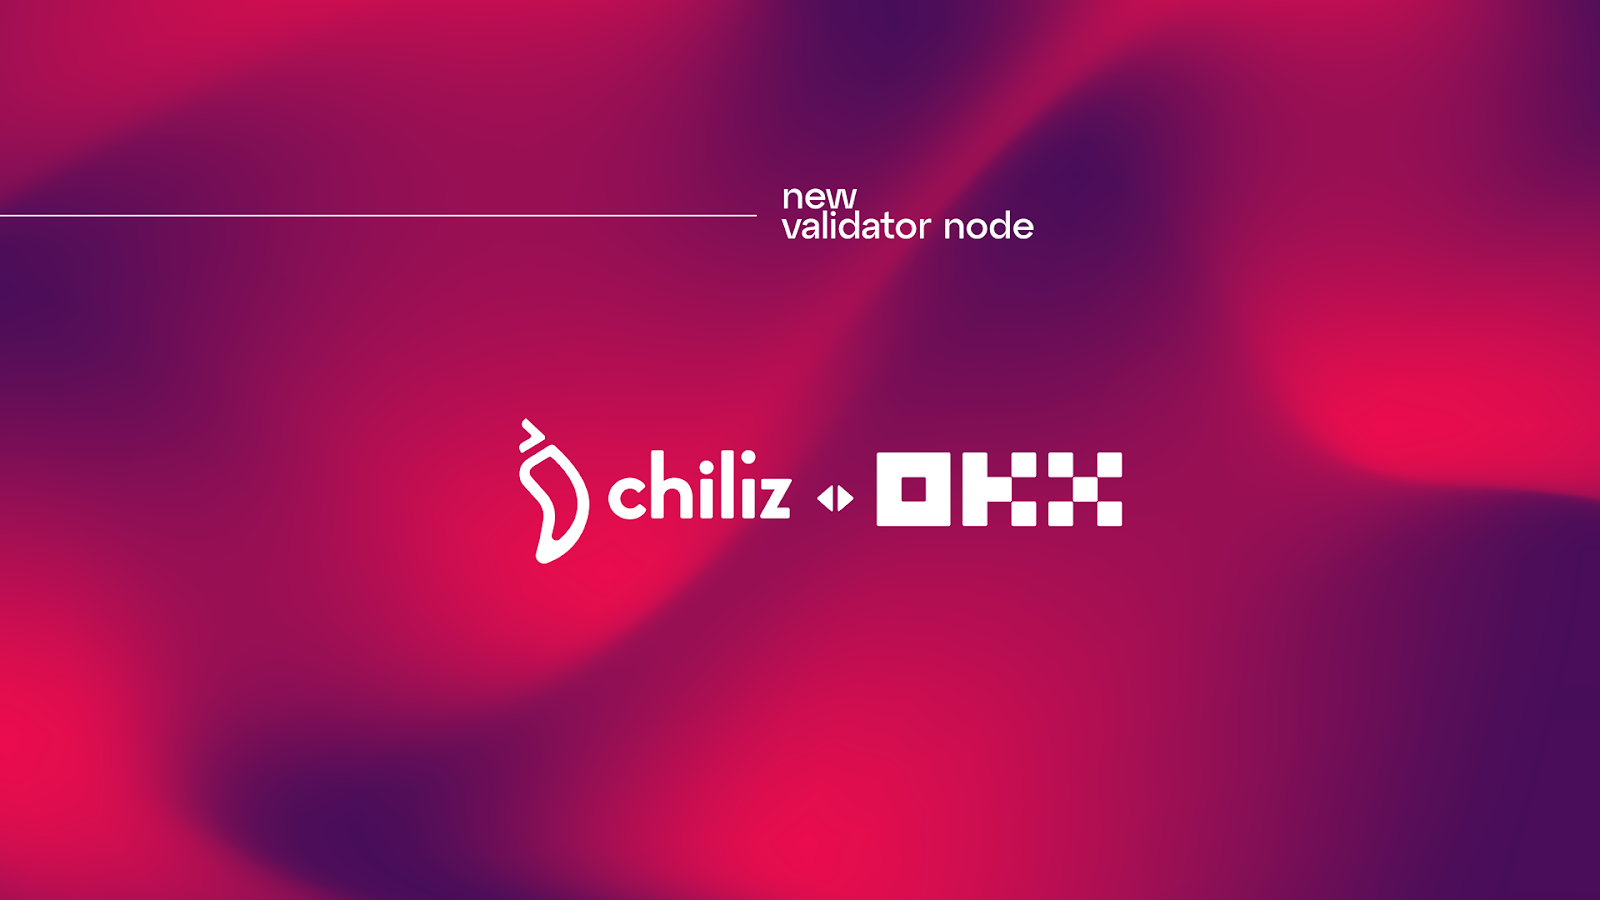 OKX Joins Chiliz as Validator, Boosting Blockchain Innovation